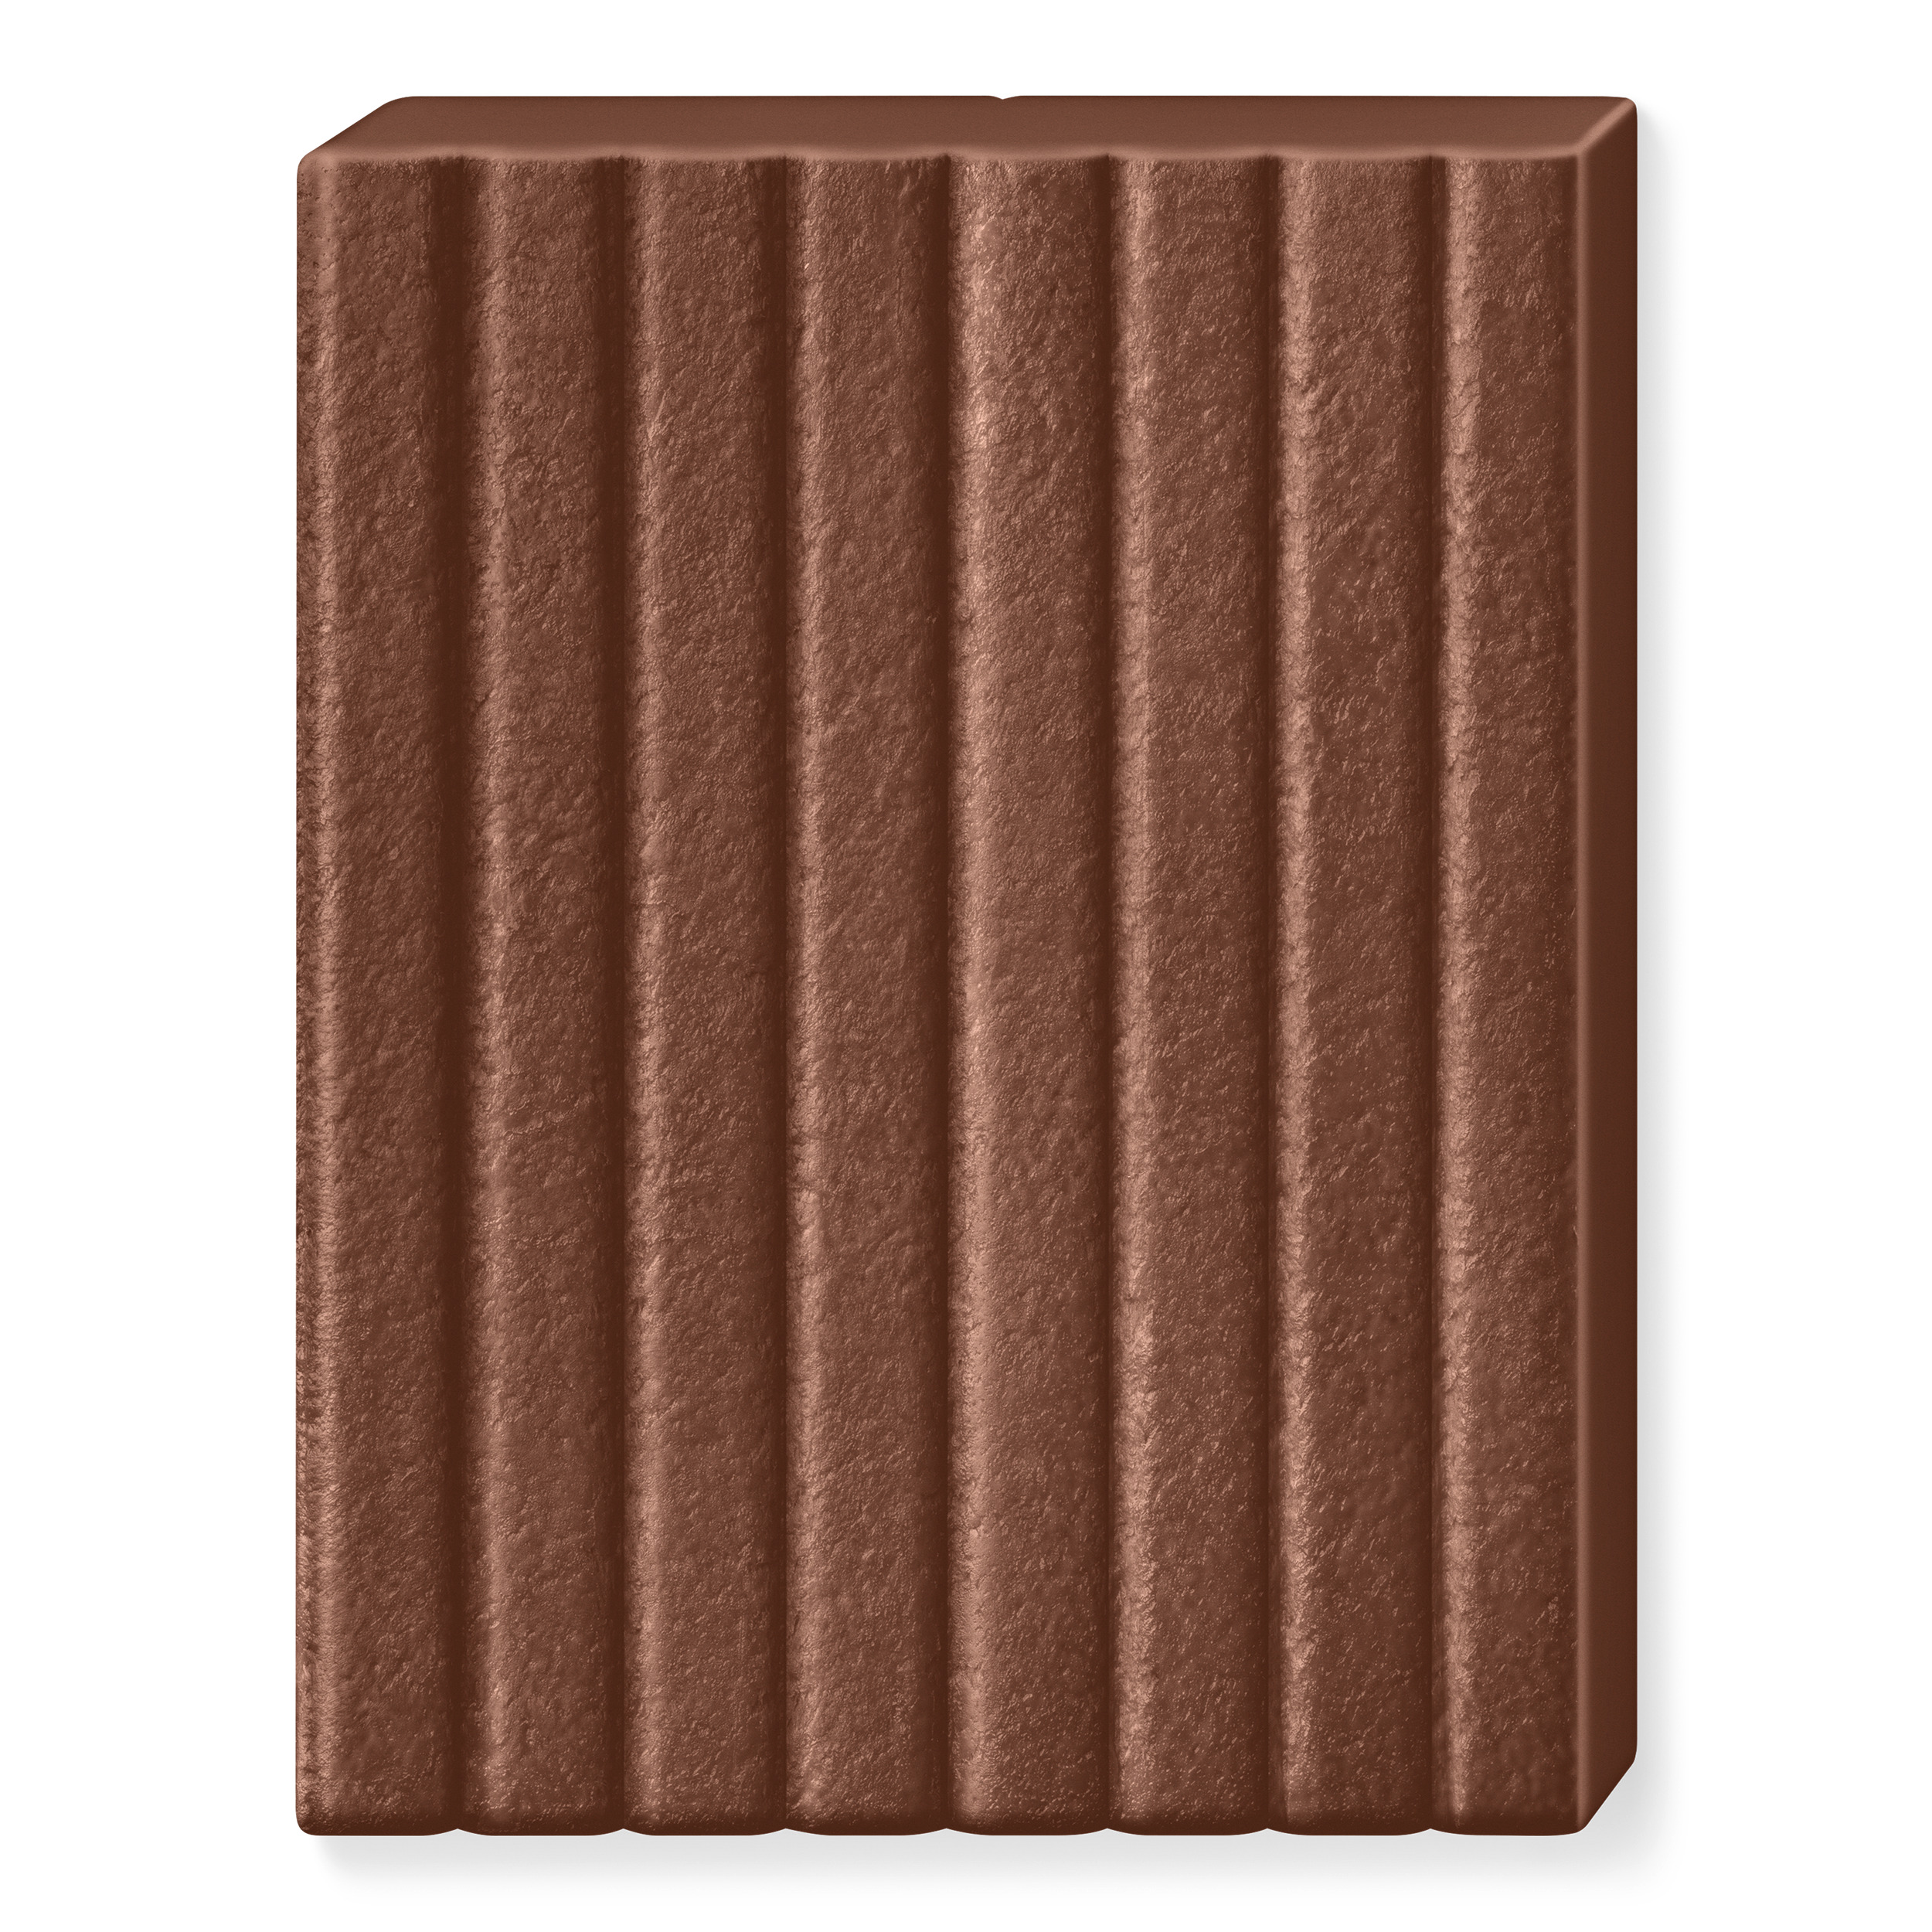 8019 779 FIMO Leather effect Nut nøddebrun ler læder